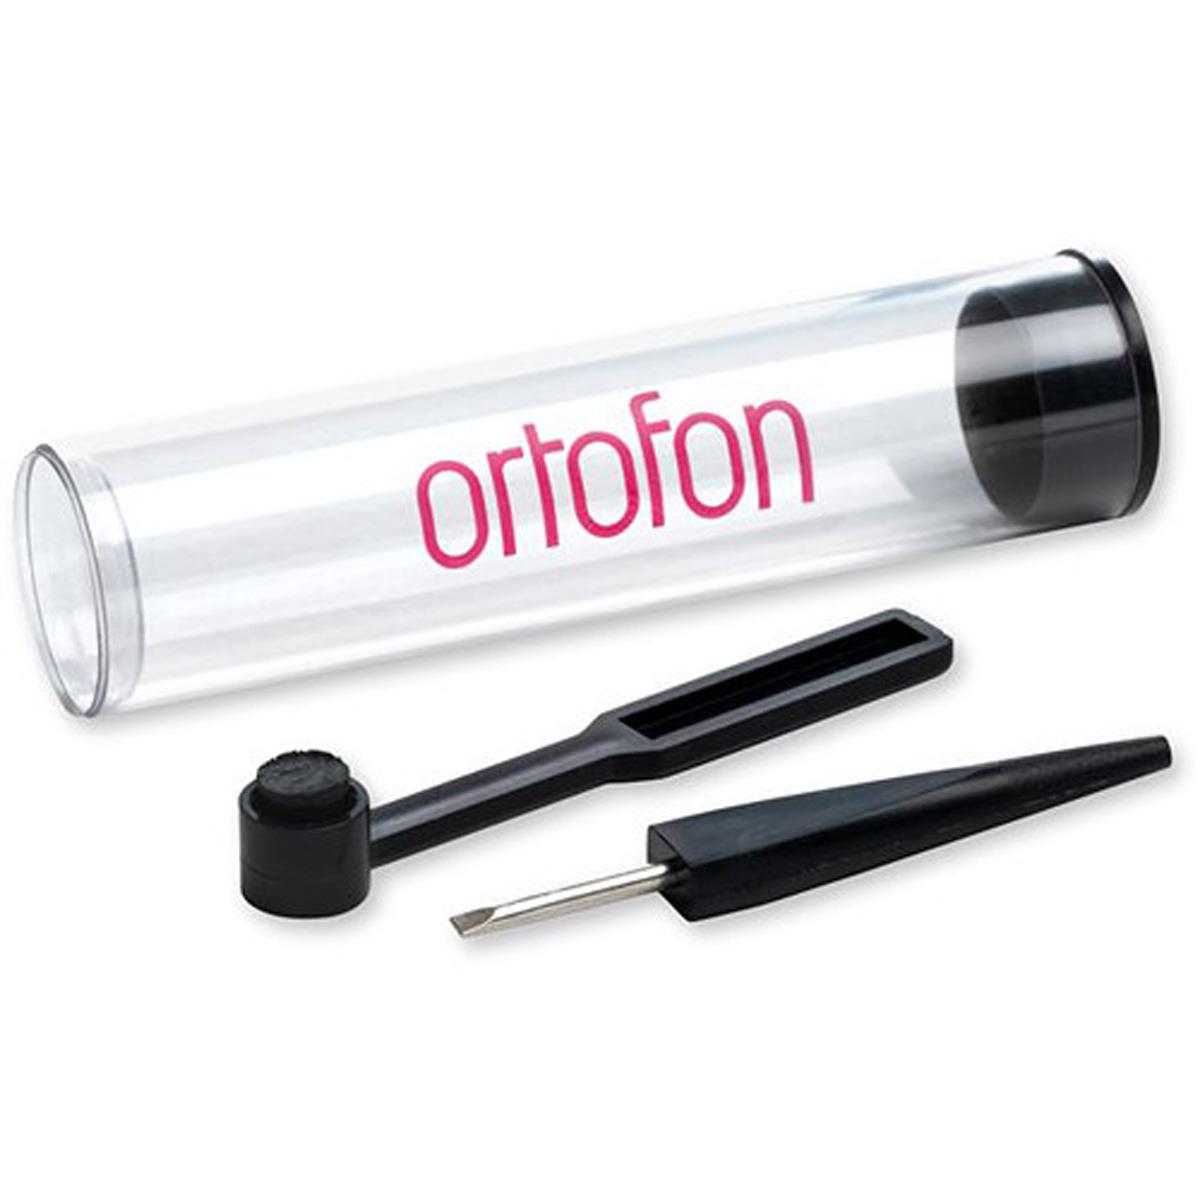 Image of Ortofon Oroton HiFi Maintenance Set with Carbon Fiber Brush and Cartridge Screwdriver